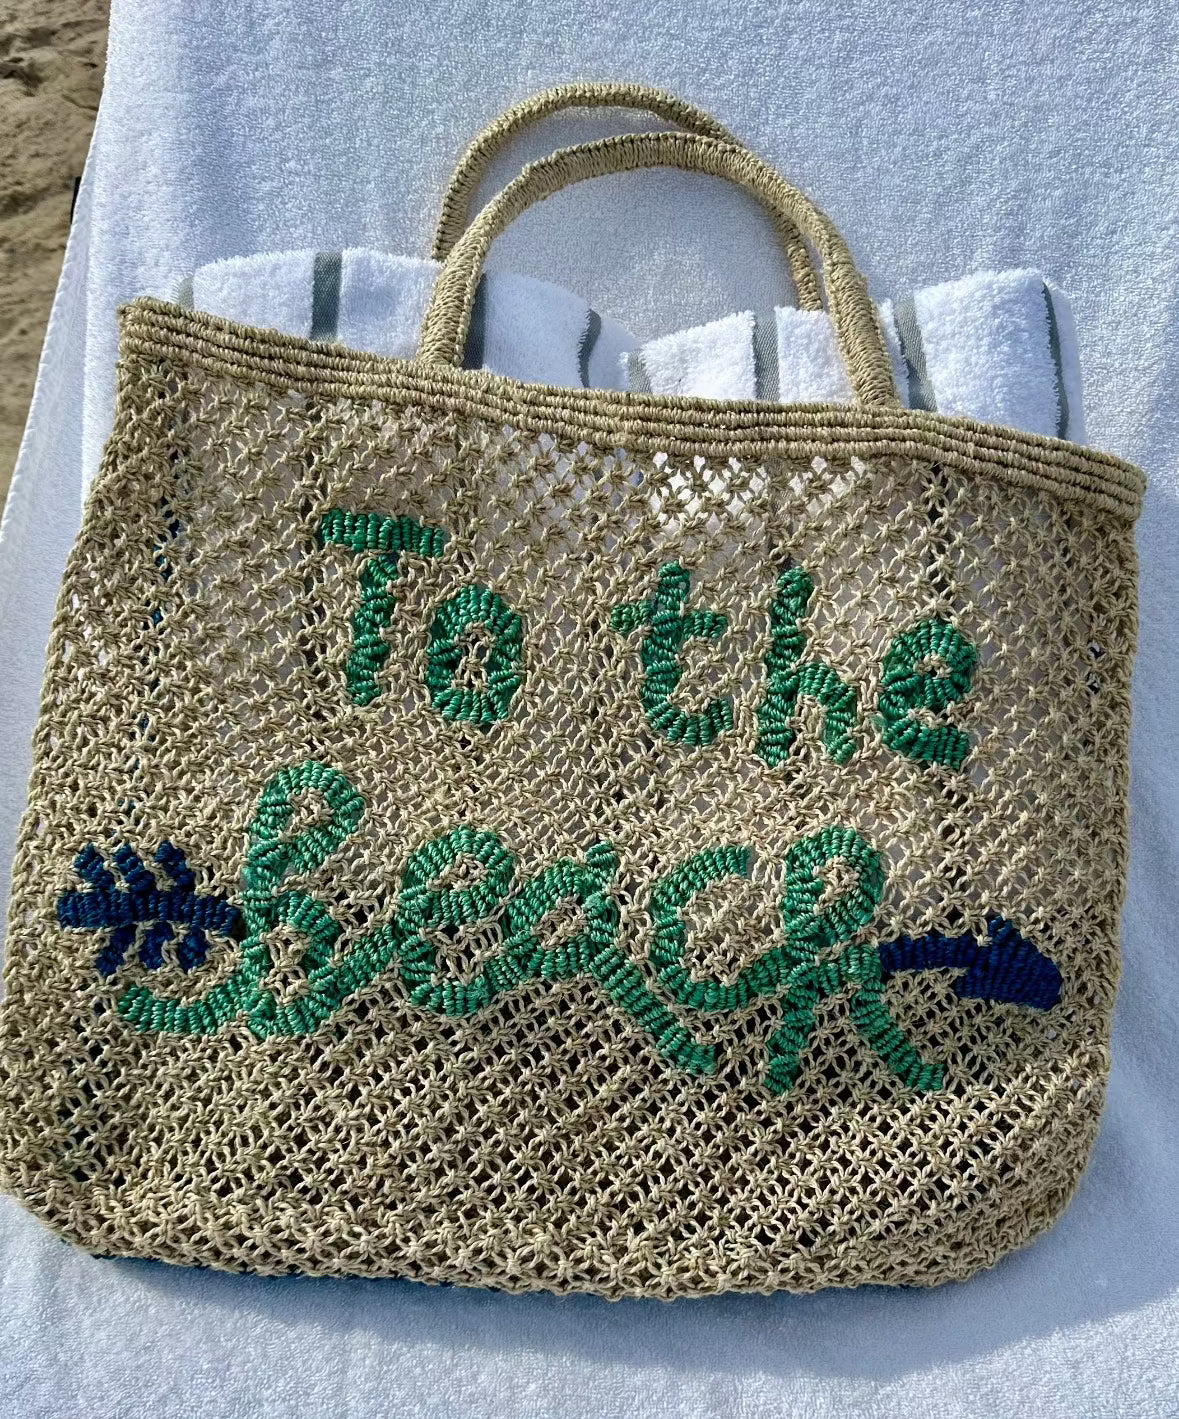 To the Beach - Natural and aqua bag